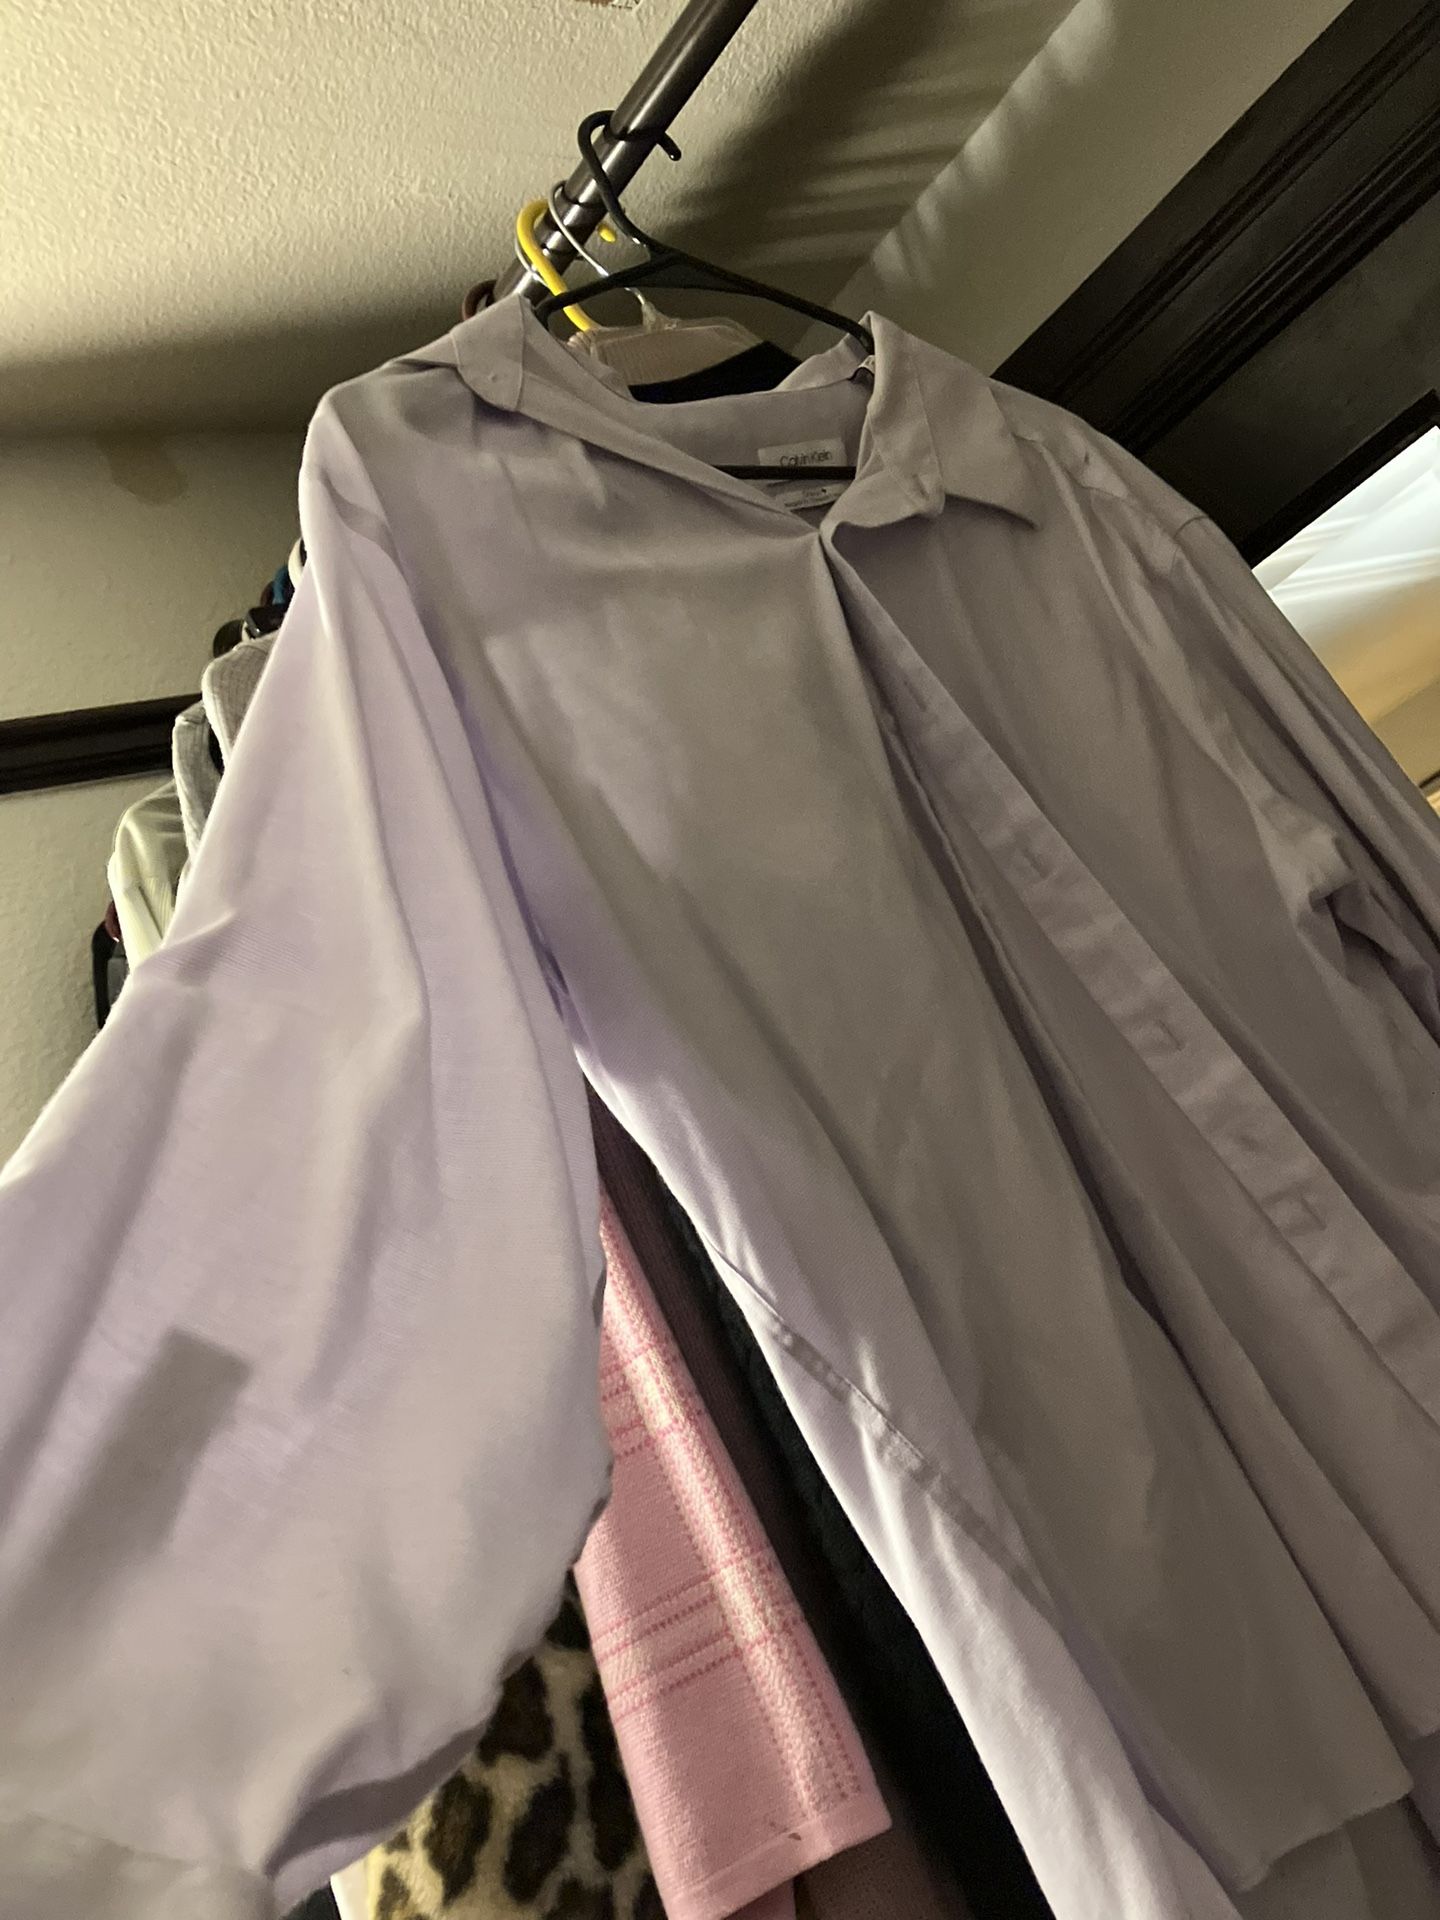 Purple Dress Shirt 